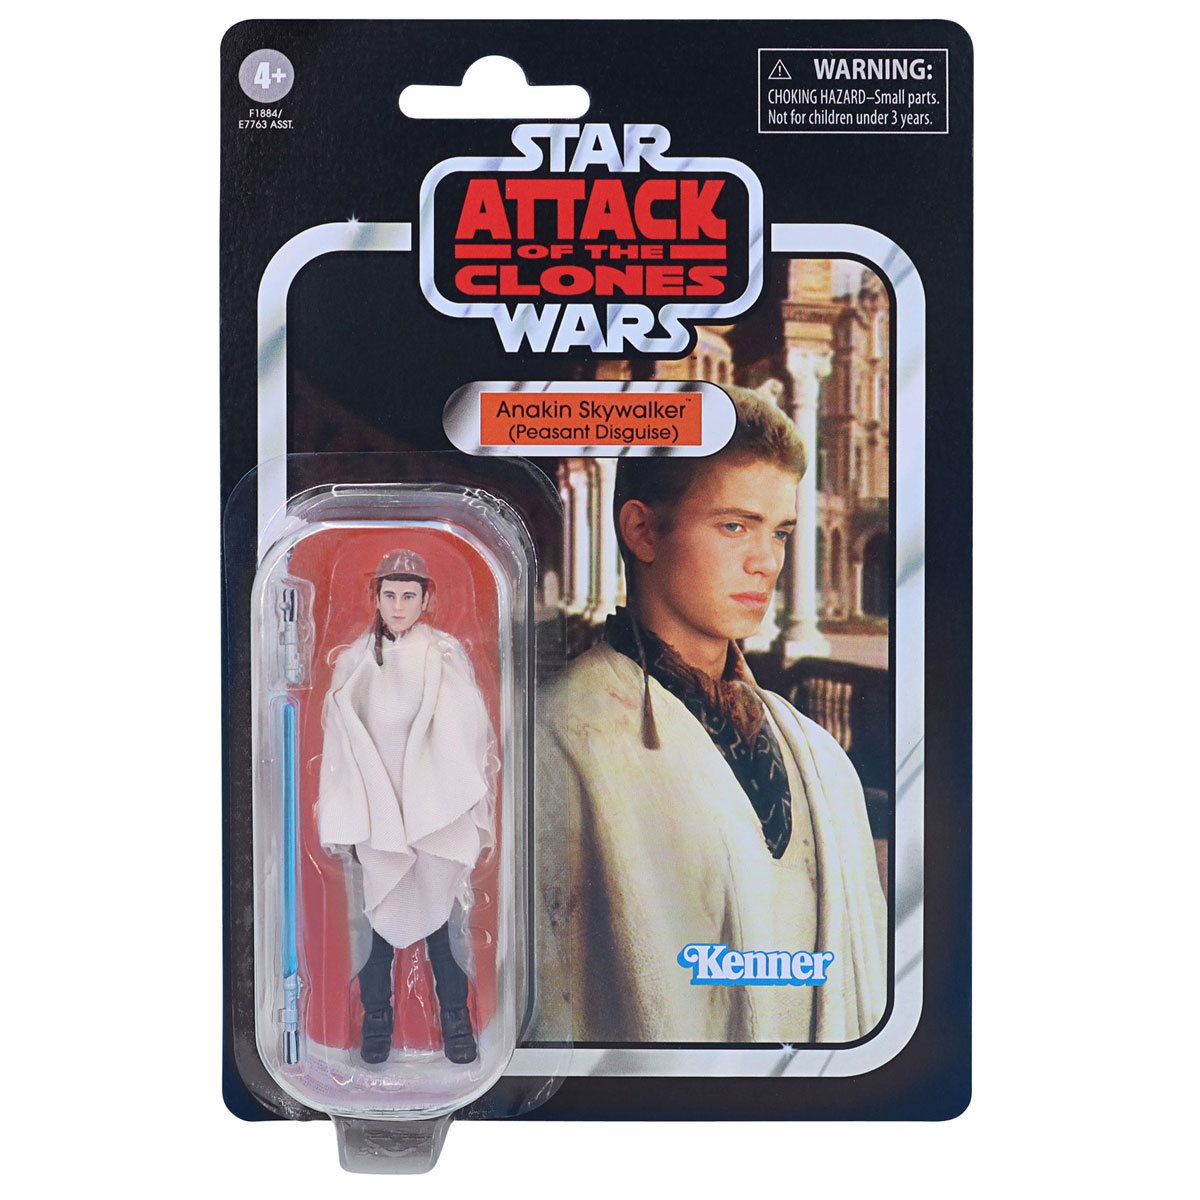 Hasbro Star Wars Vintage Collection Anakin Skywalker Action Figure for sale online